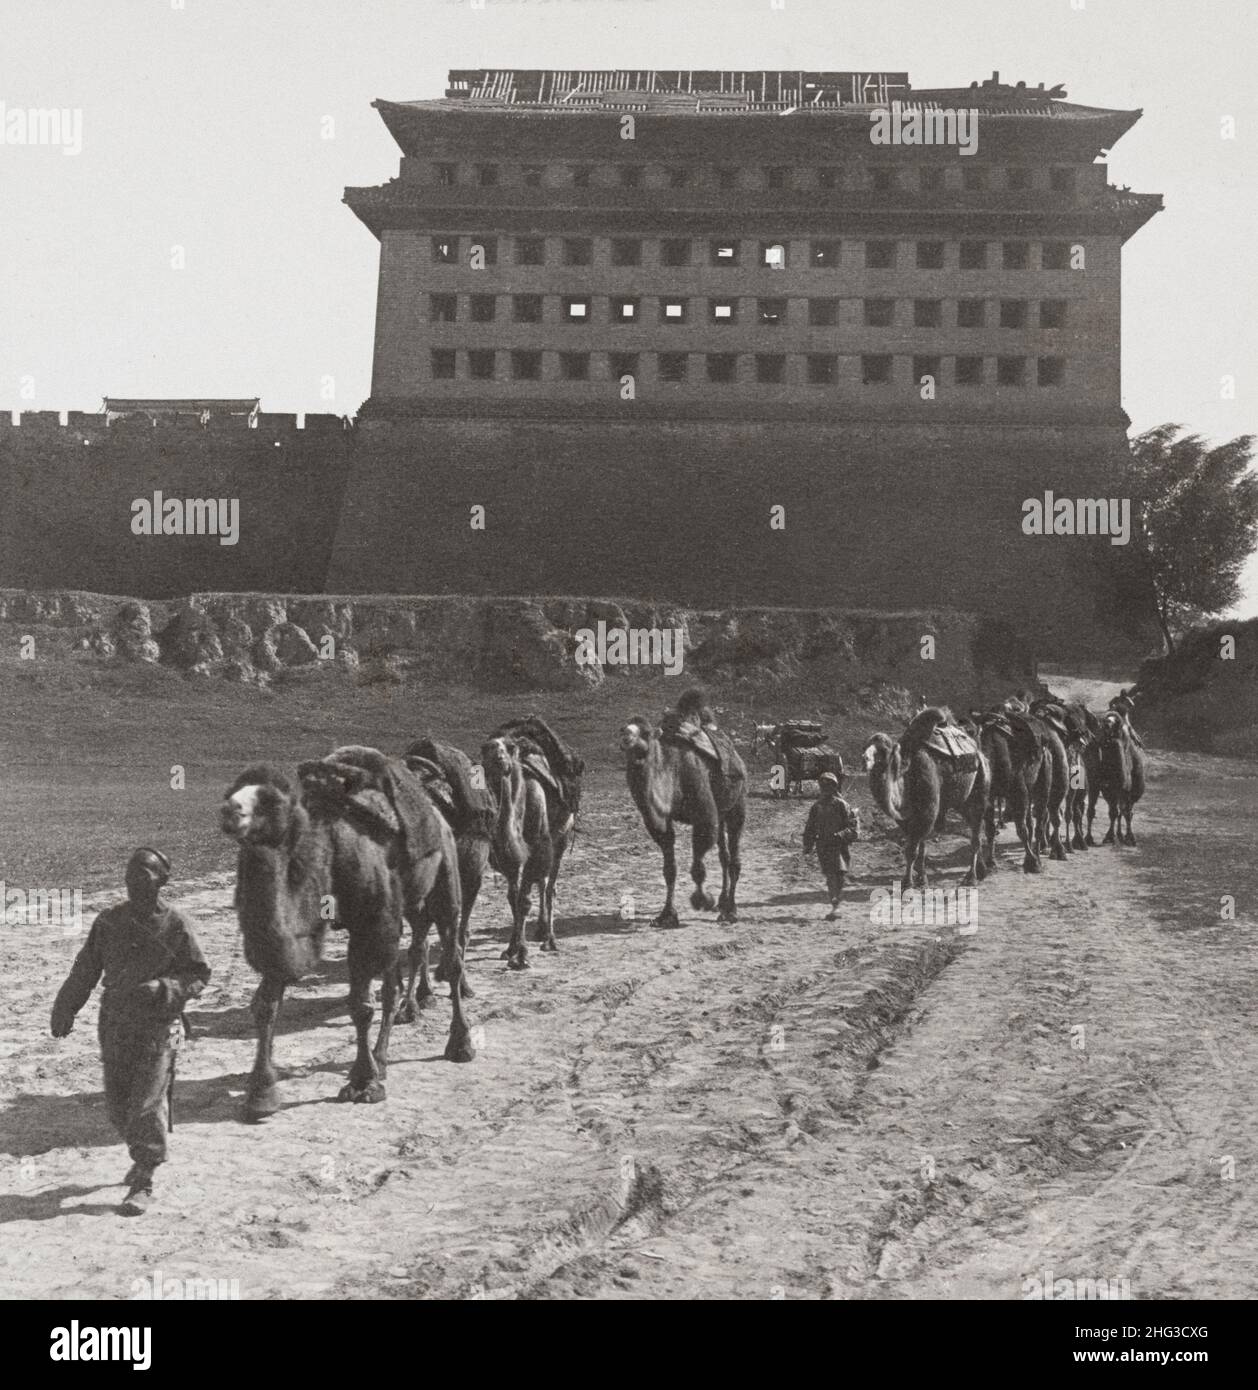 Vintage photo of camel caravan leaving Peking tower of Tartar Wall in background, China. 1907 Stock Photo